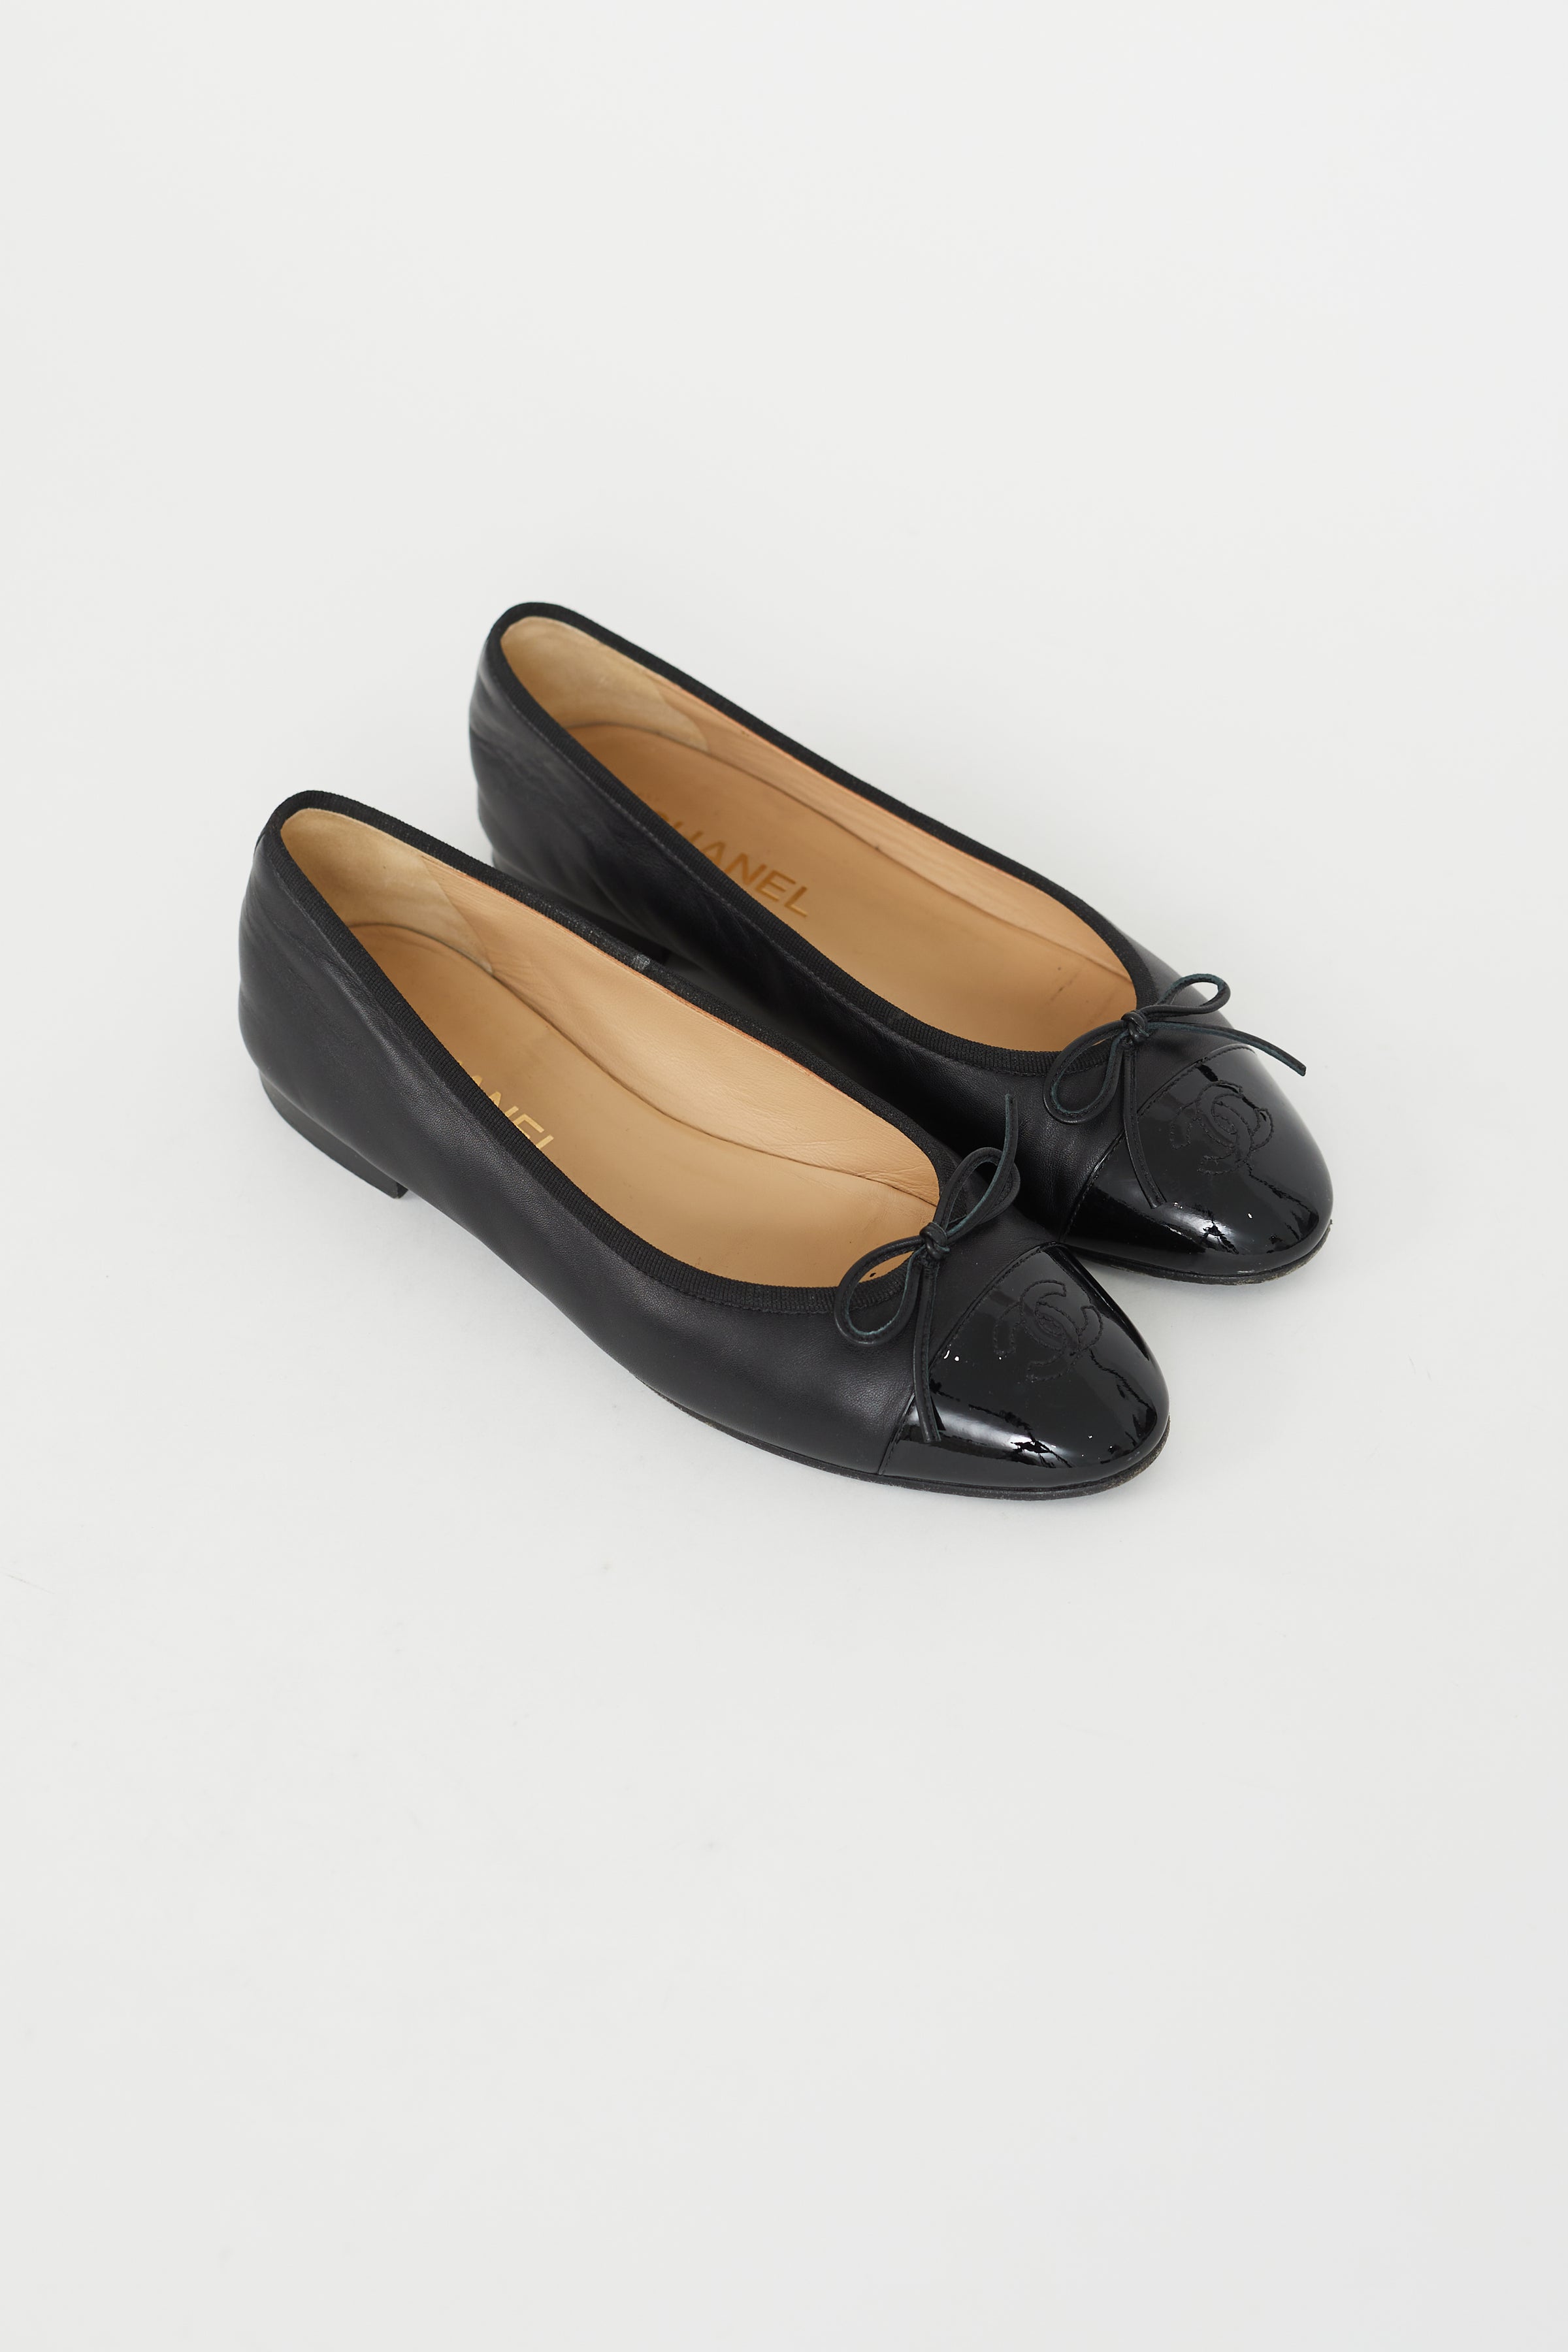 Chanel Black Leather Patent Cap Toe Ballerina Ballet Flats